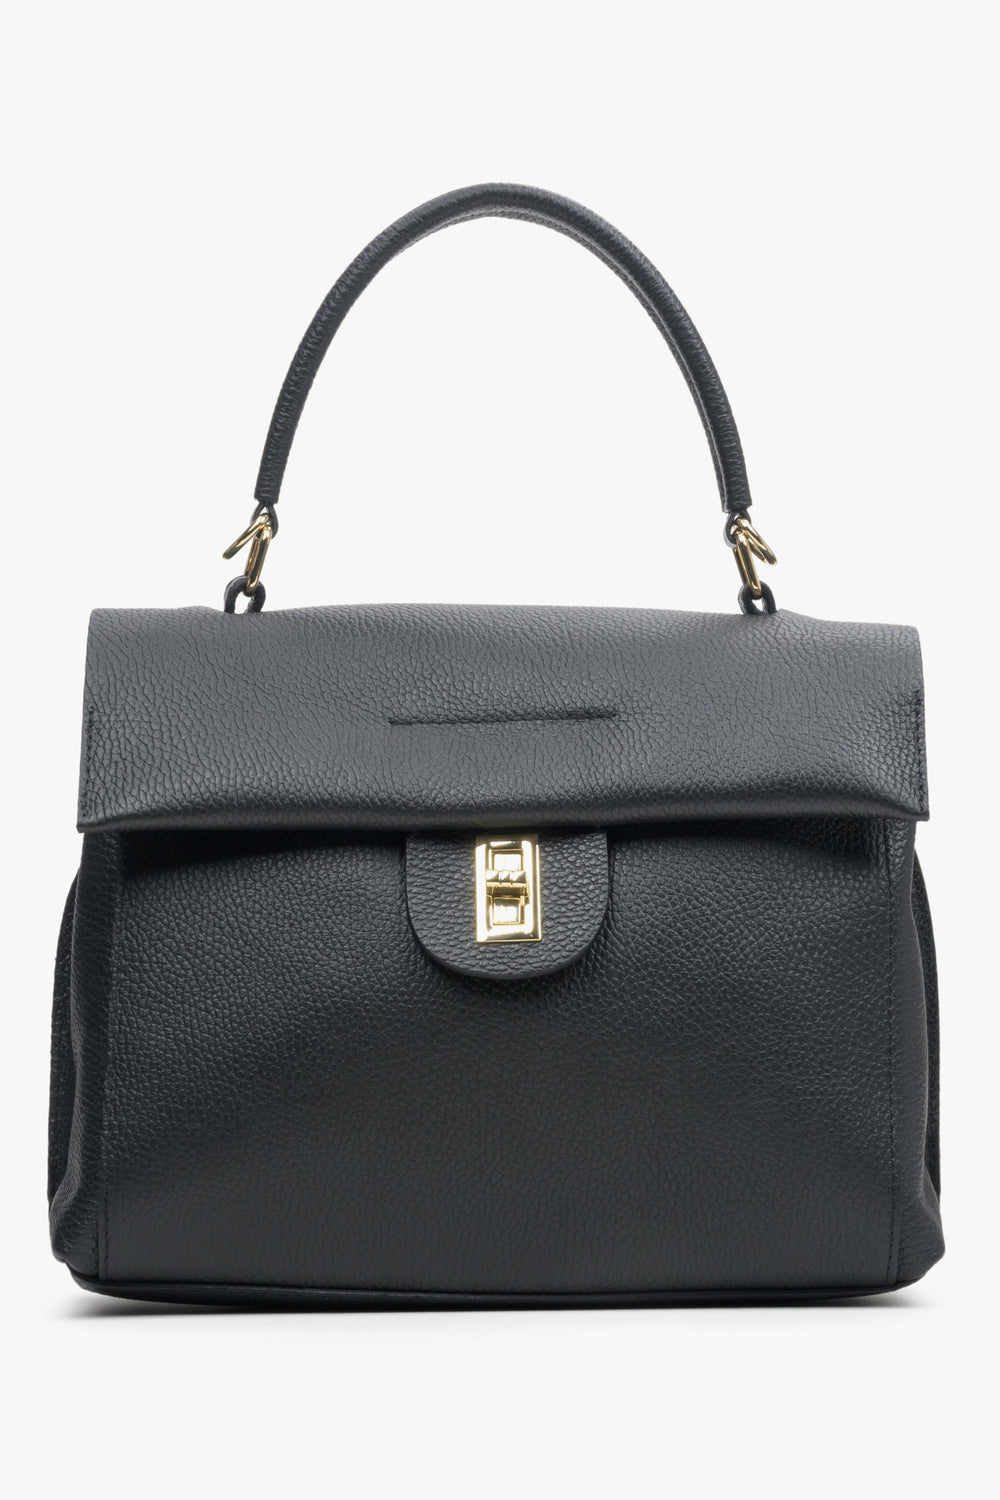 Women's Black Box Style Handbag made of Italian Genuine Leather Estro ER00113696.